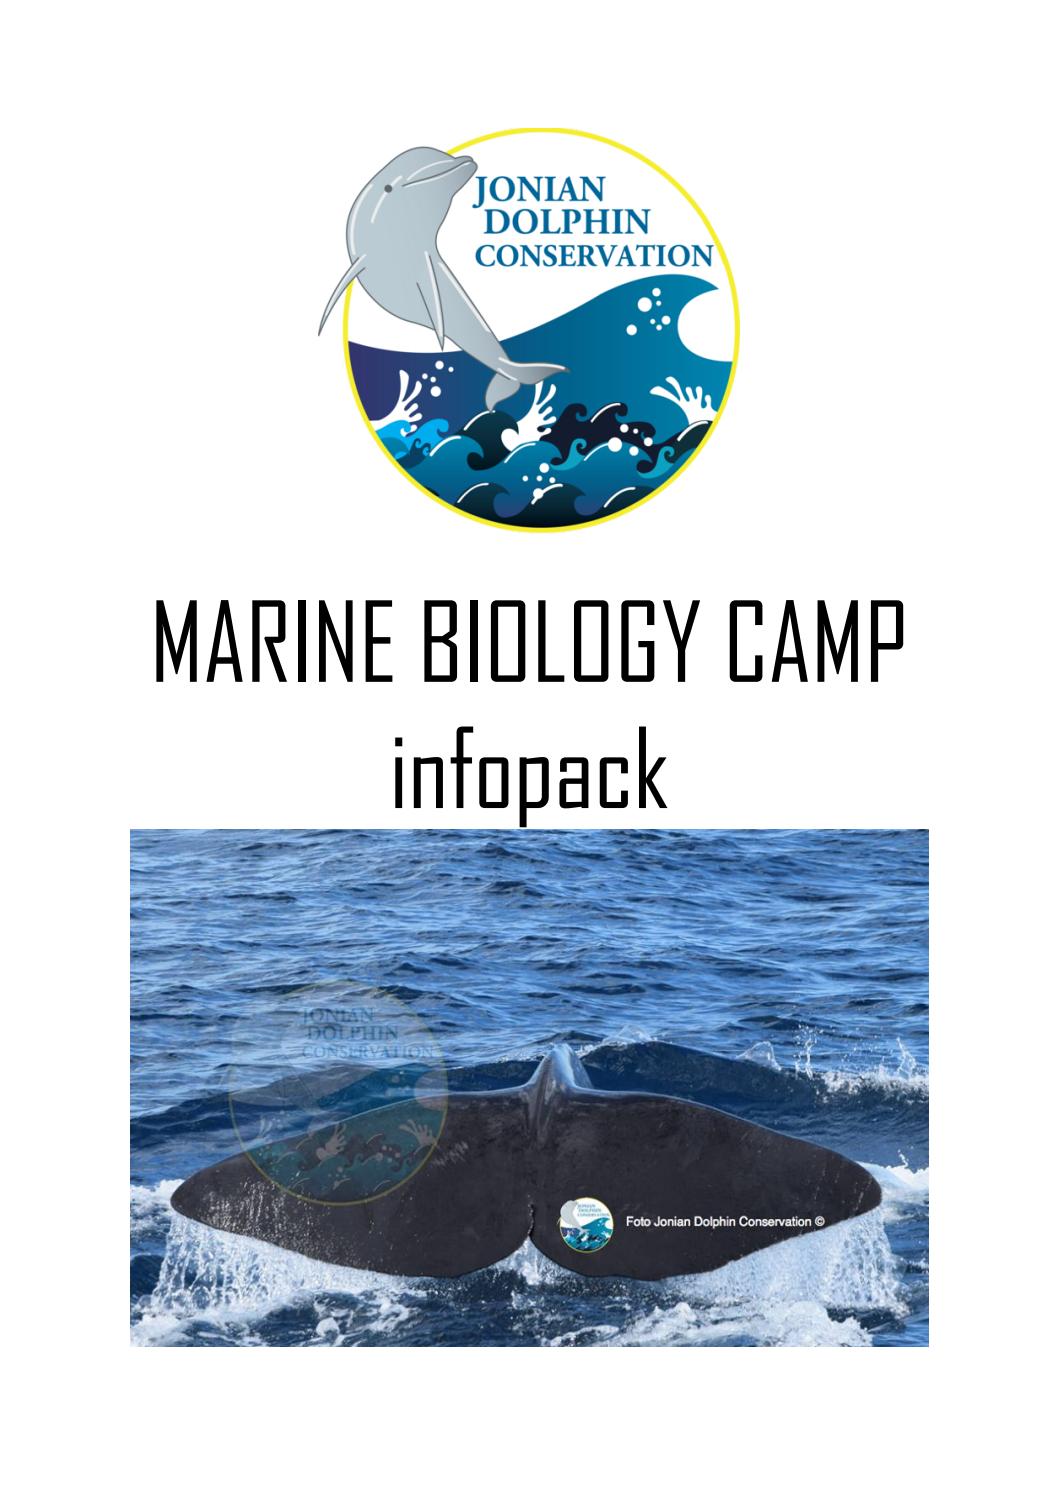 Marine Biology Camp by s.bellomo88 - Issuu